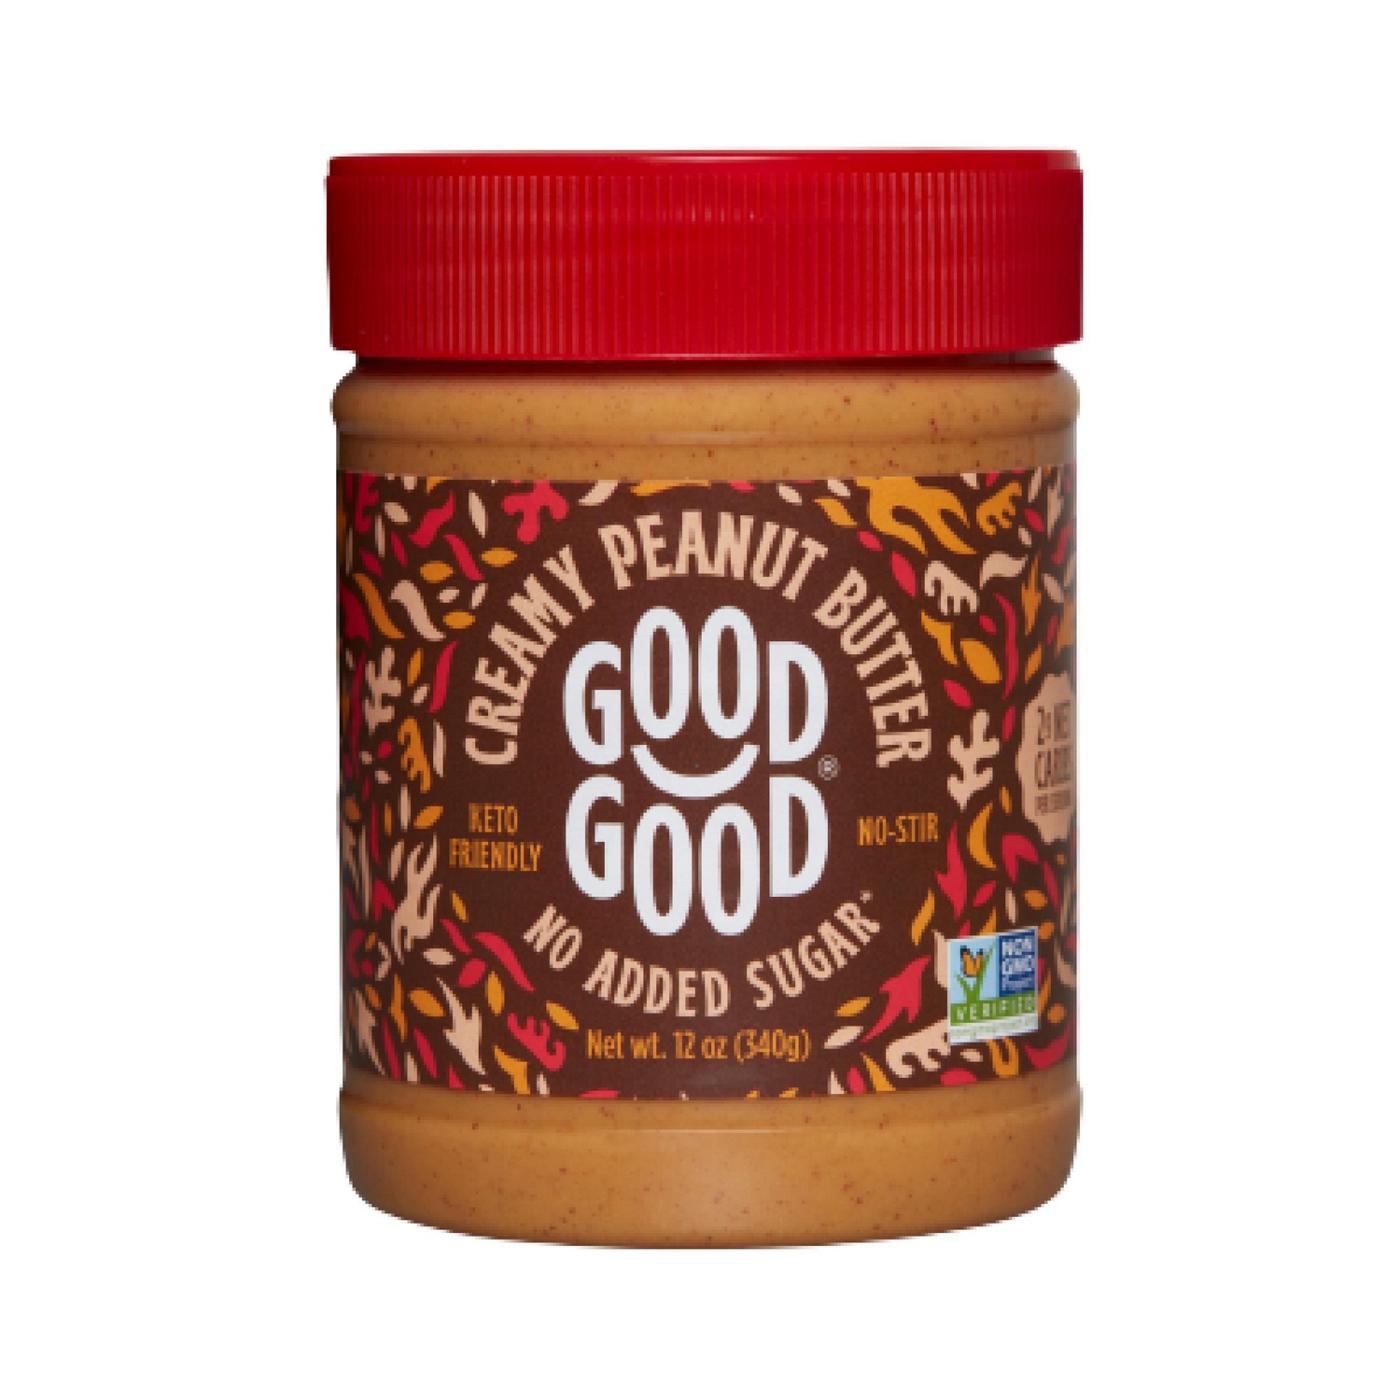 Good Good No Sugar Added Creamy Peanut Butter; image 1 of 2